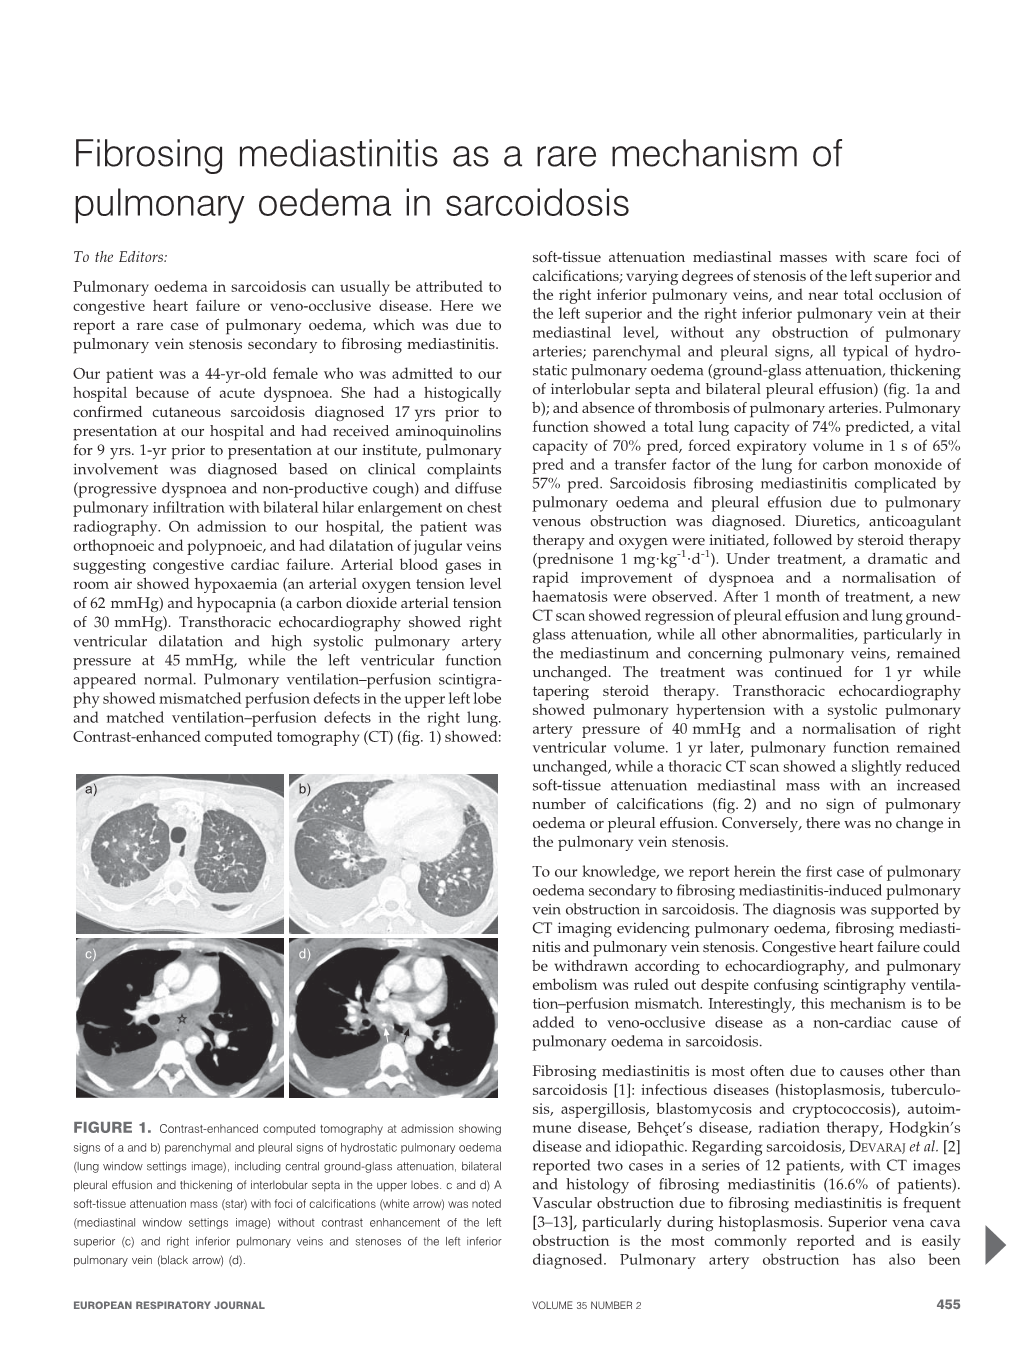 Fibrosing Mediastinitis As a Rare Mechanism of Pulmonary Oedema in Sarcoidosis